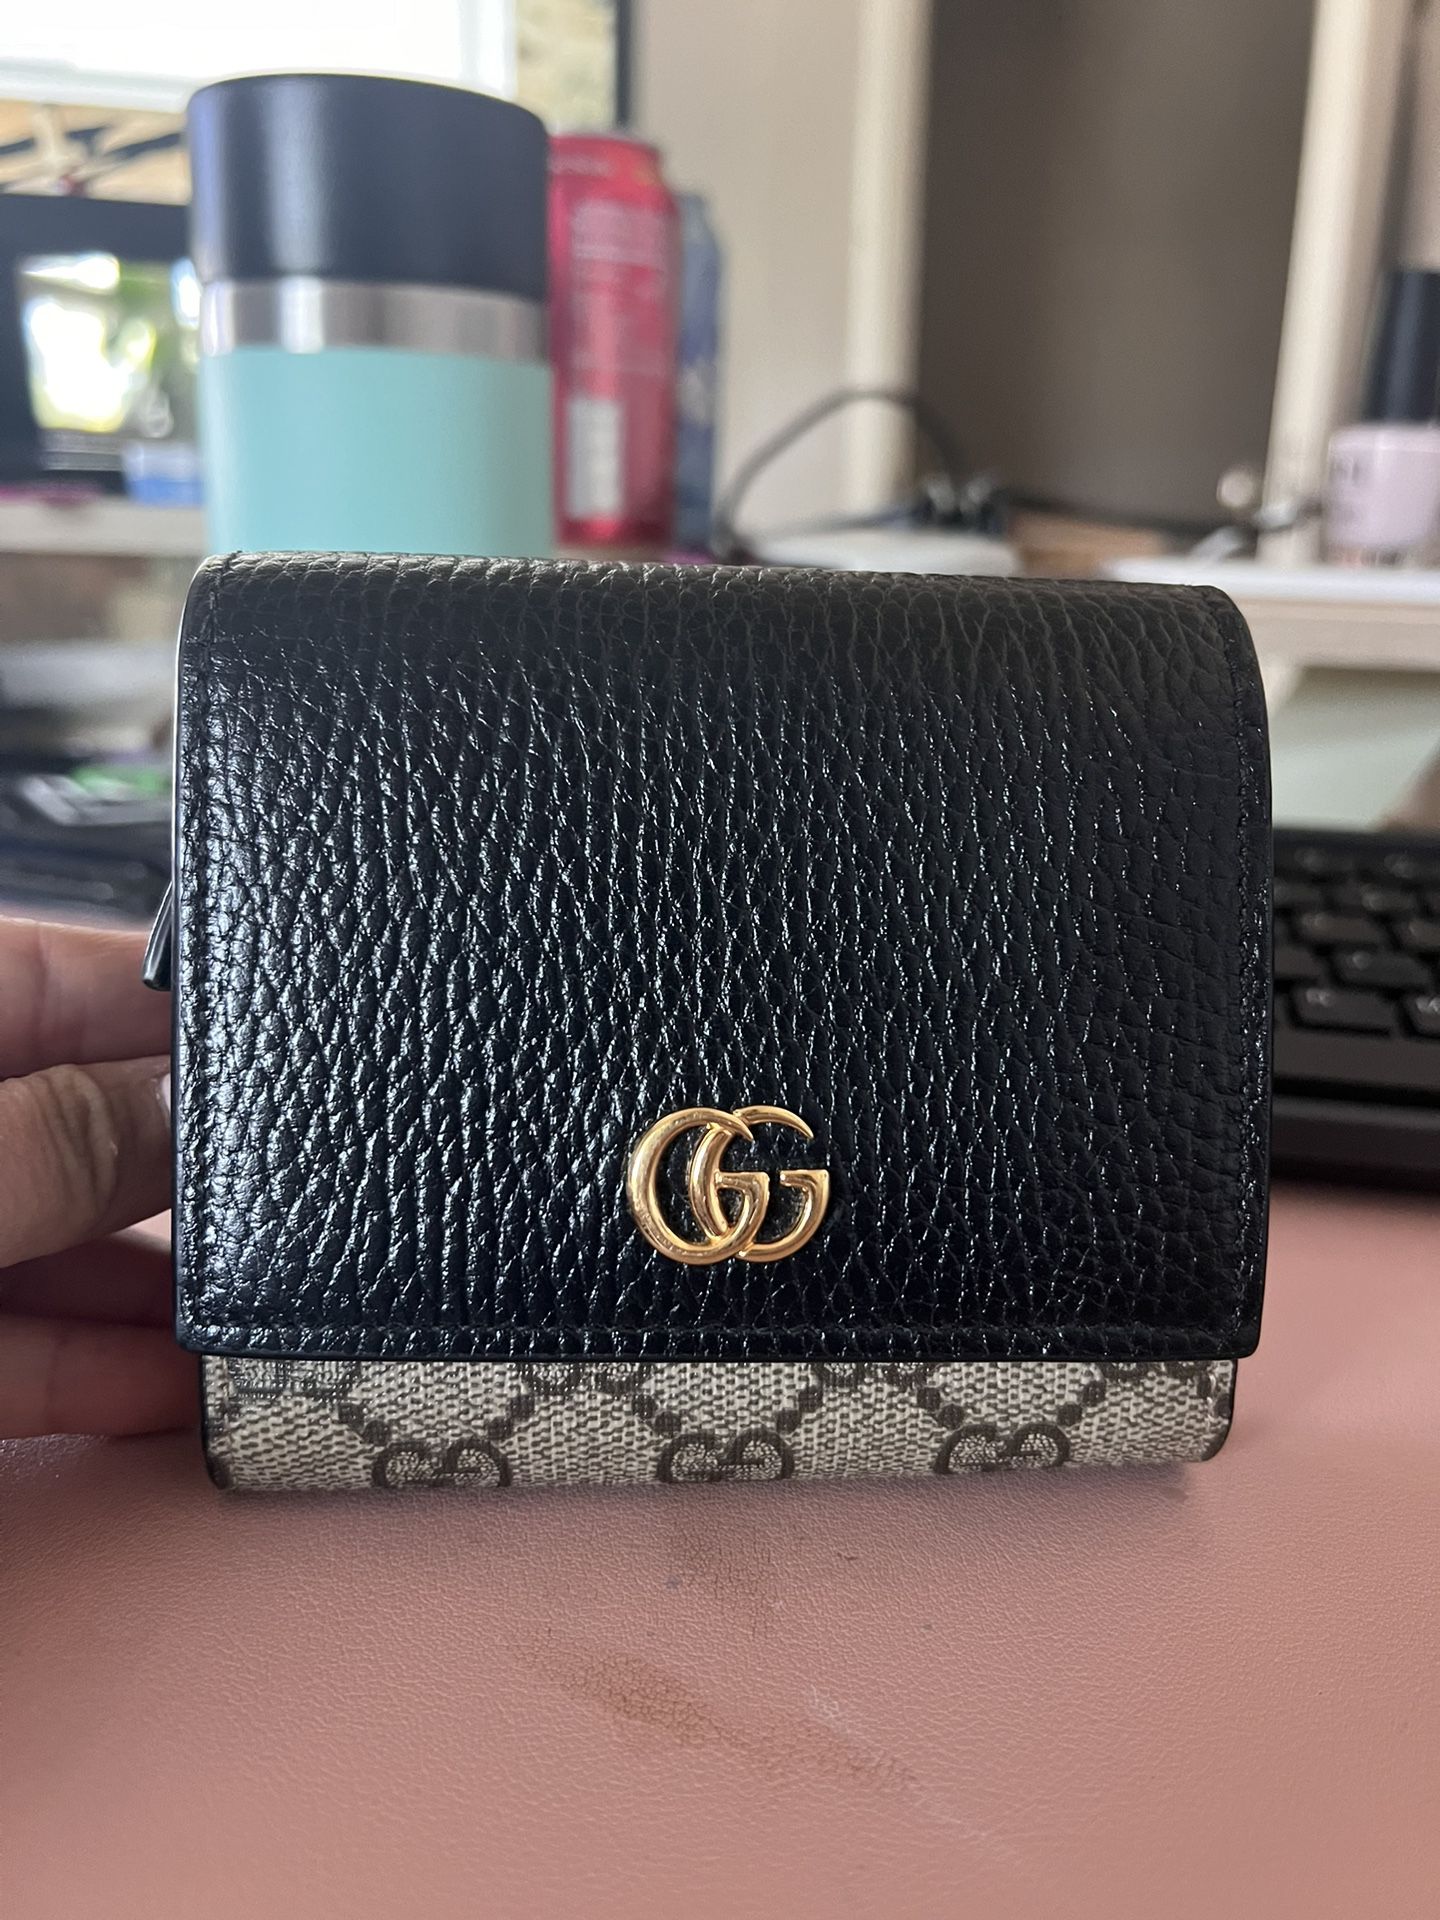 Original Gucci Wallet